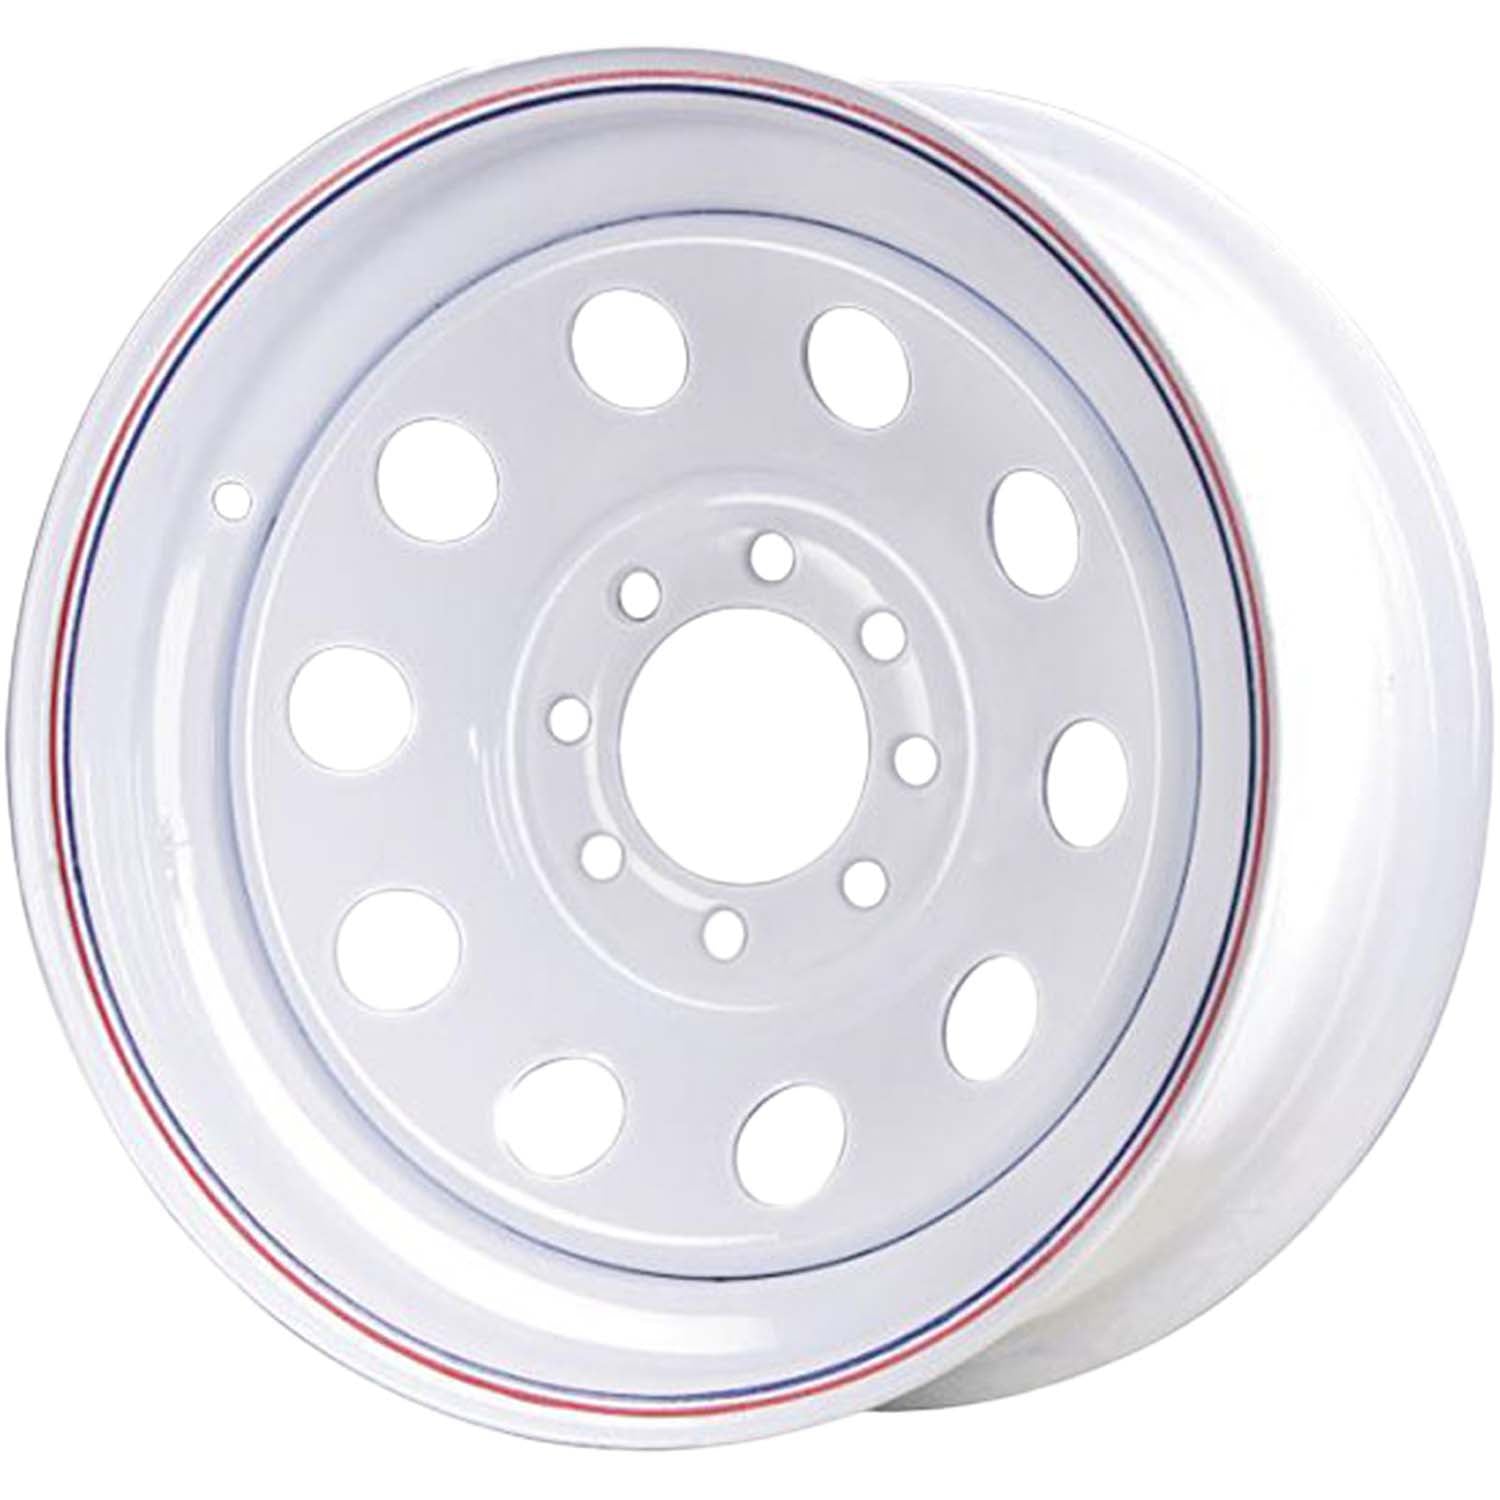 16x6 8 On 6.5 Modular Steel Trailer Wheel - White with Pin Stripes